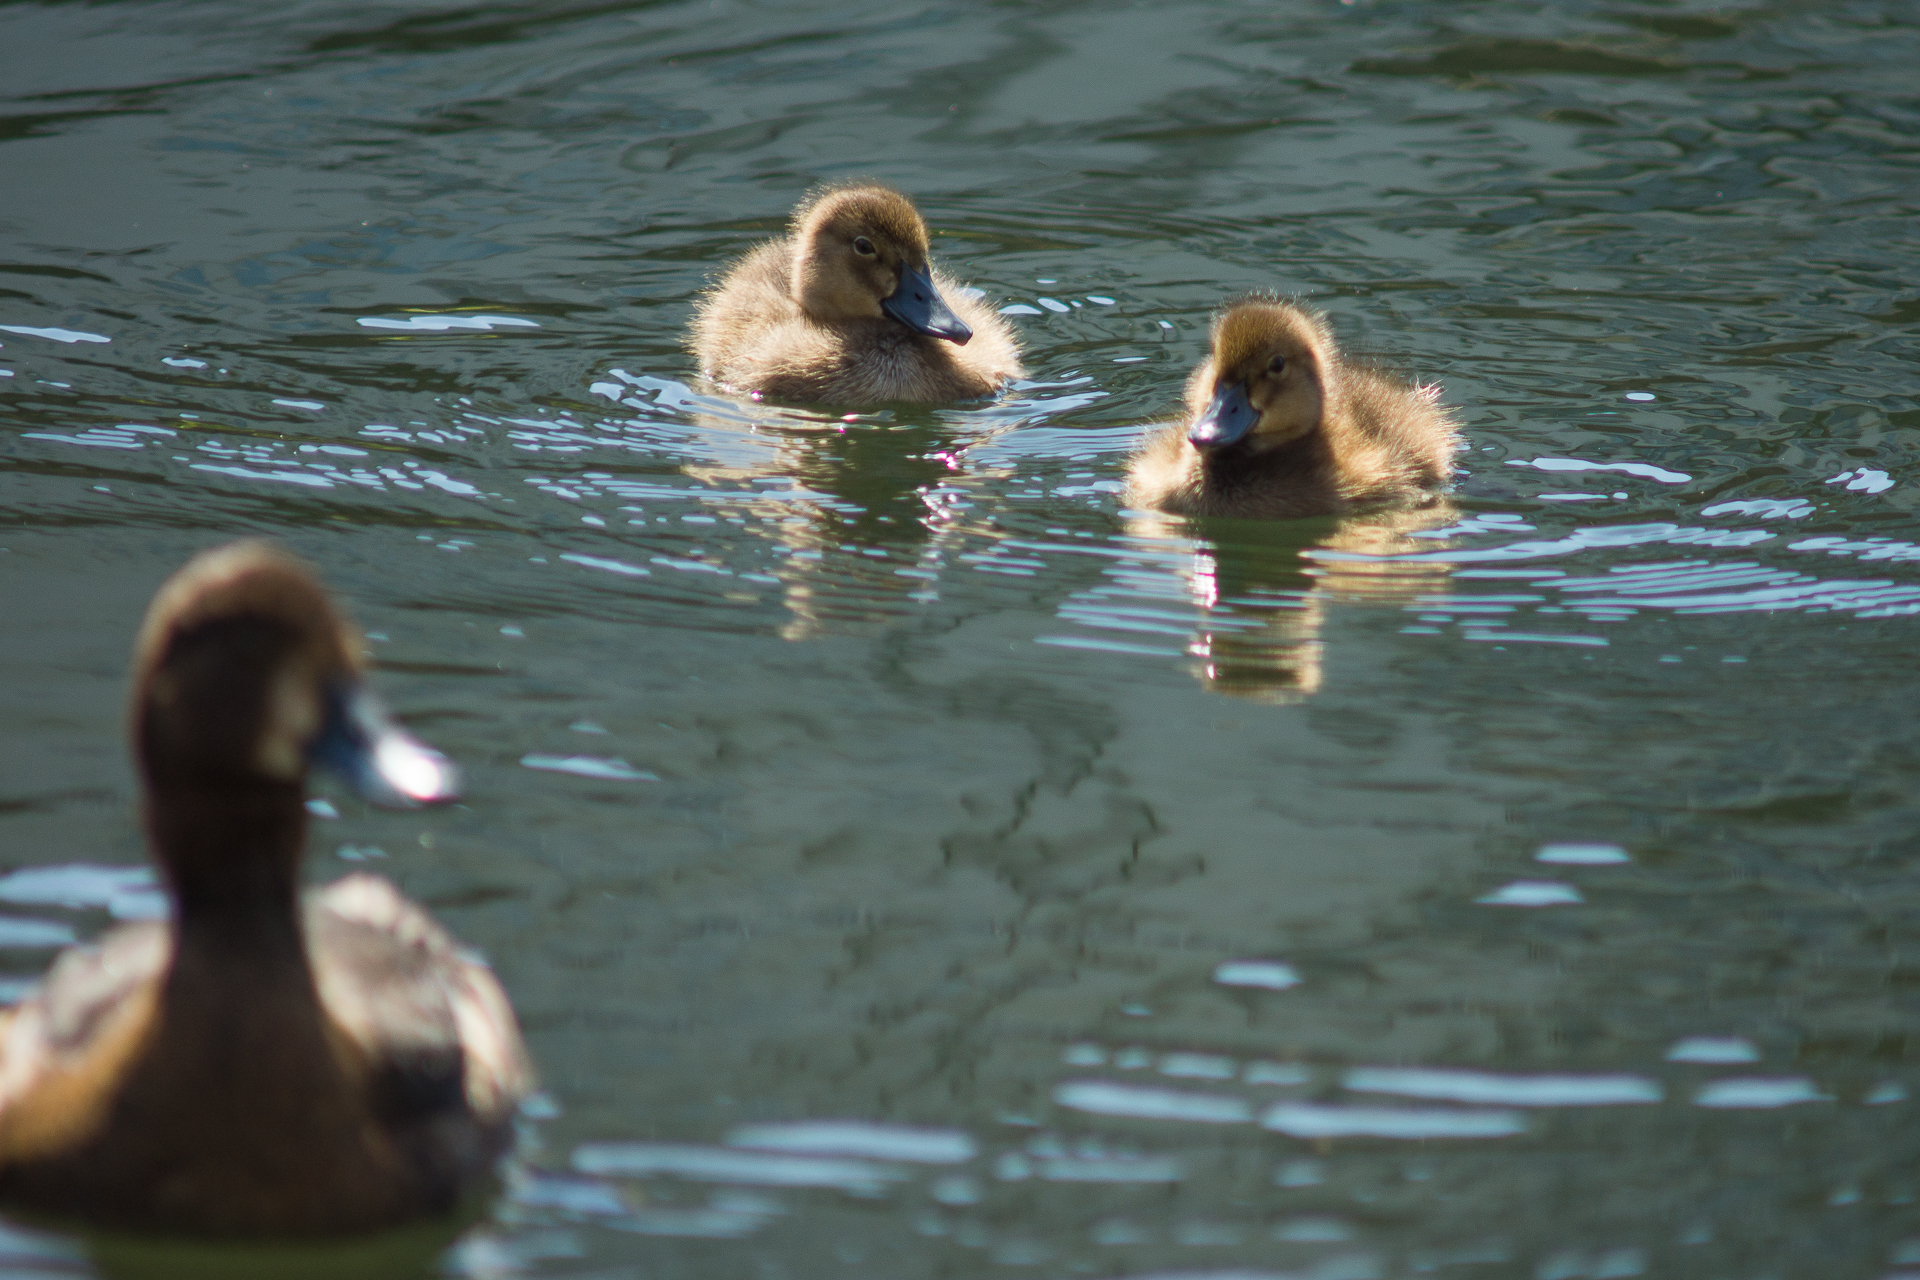 three ducks on a lake of some sort